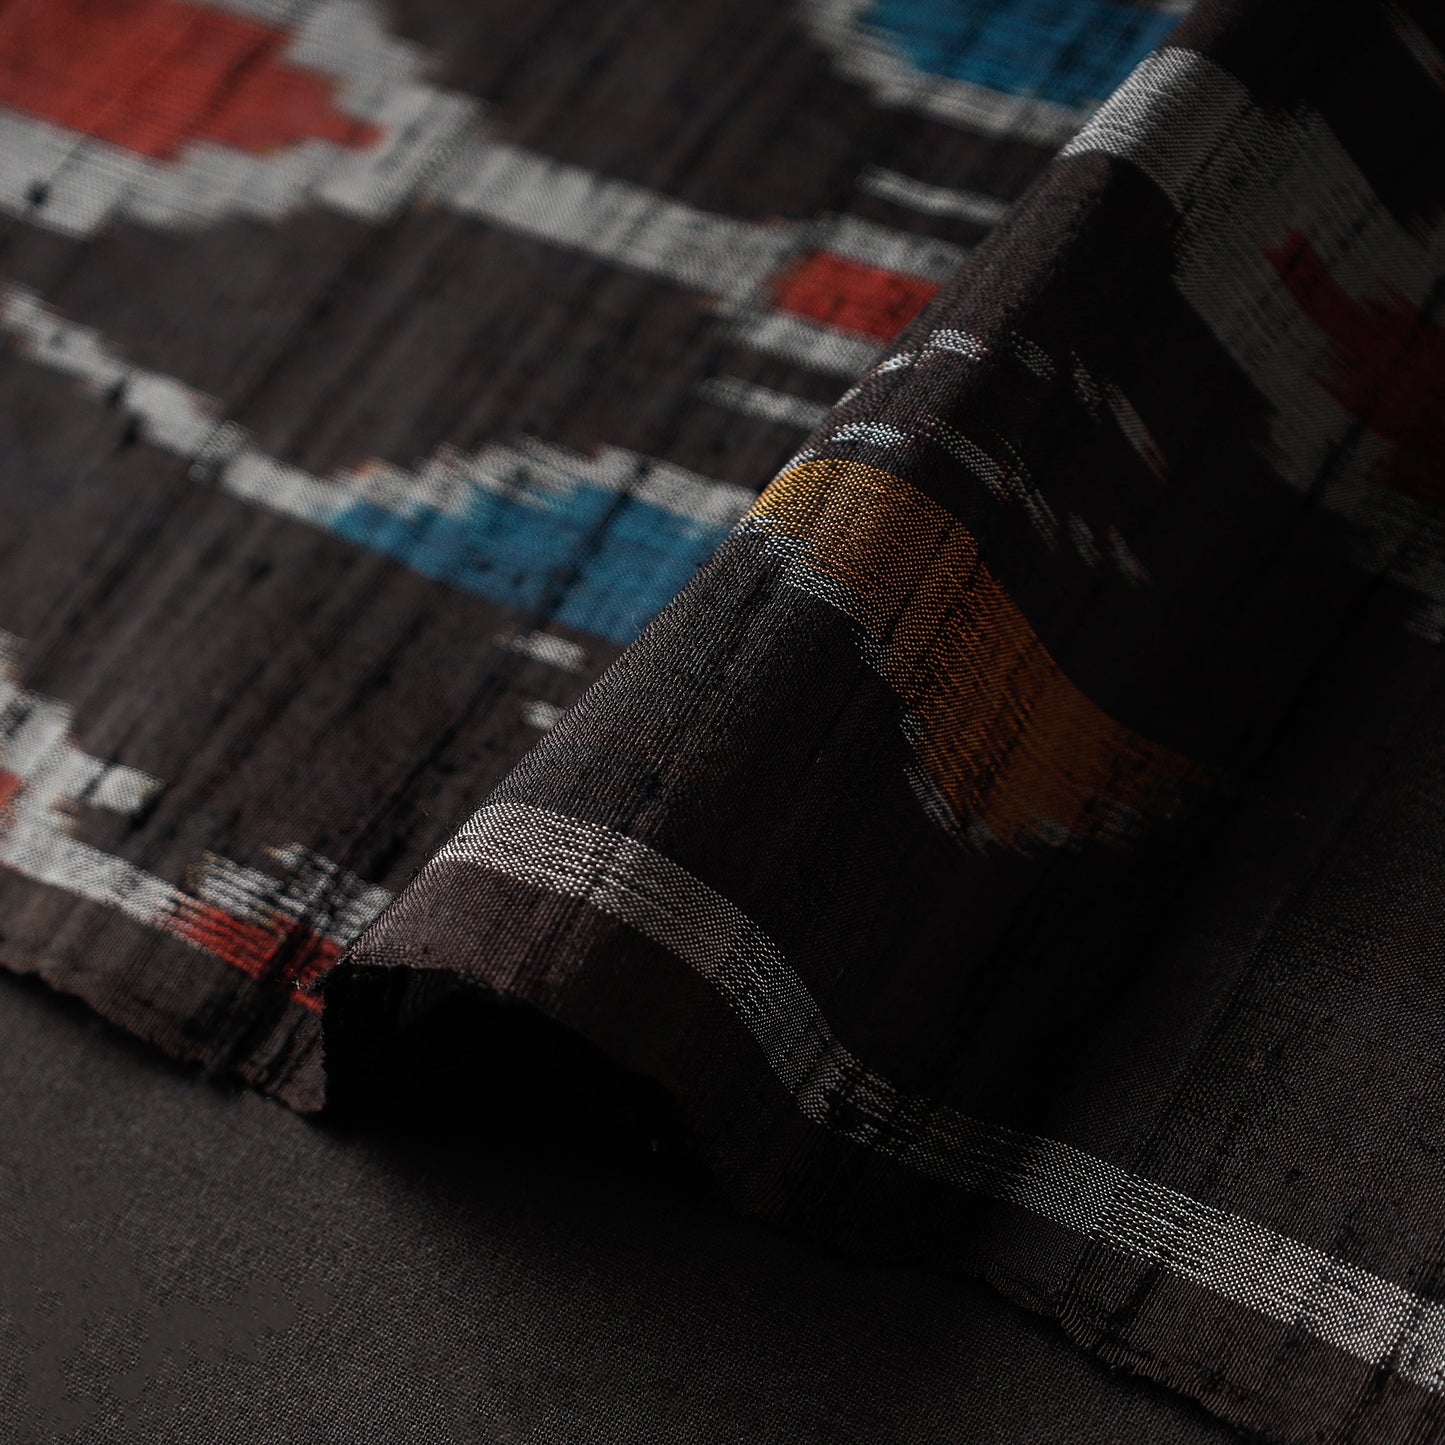 Multicolor Patterns On Black Pochampally Ikat Raw Silk Pure Handloom Fabric